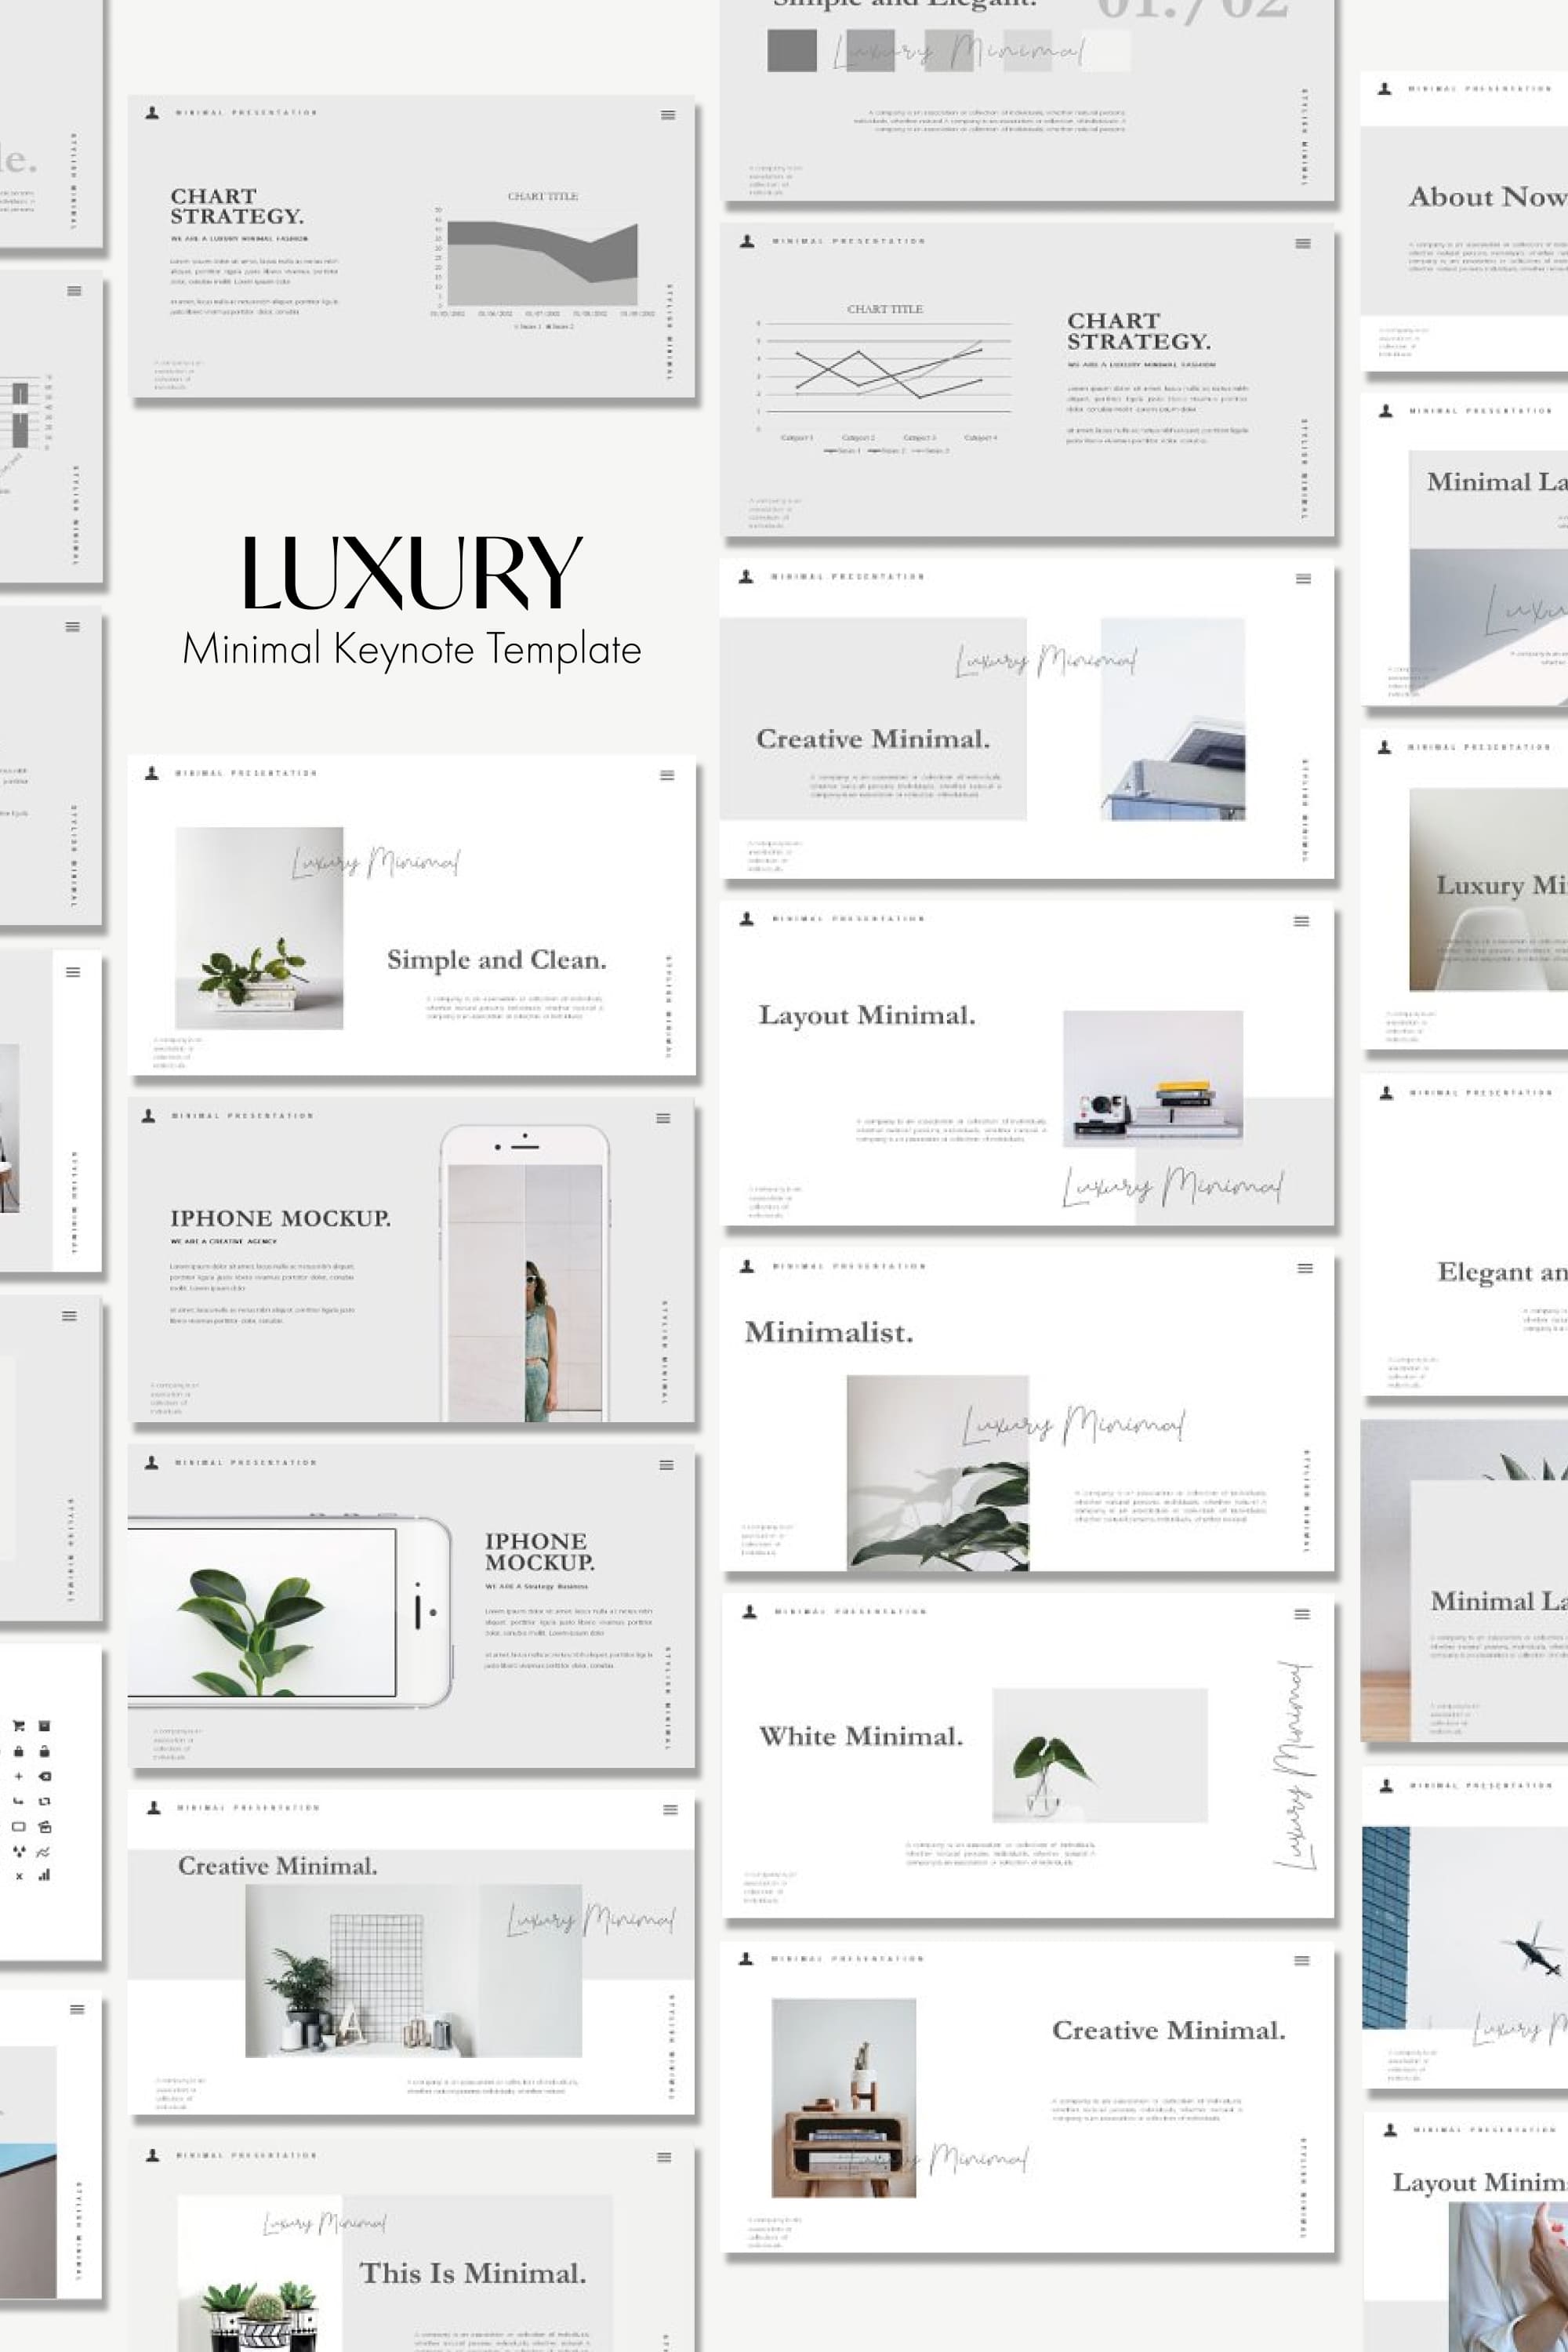 Luxury minimal keynote template - pinterest image preview.